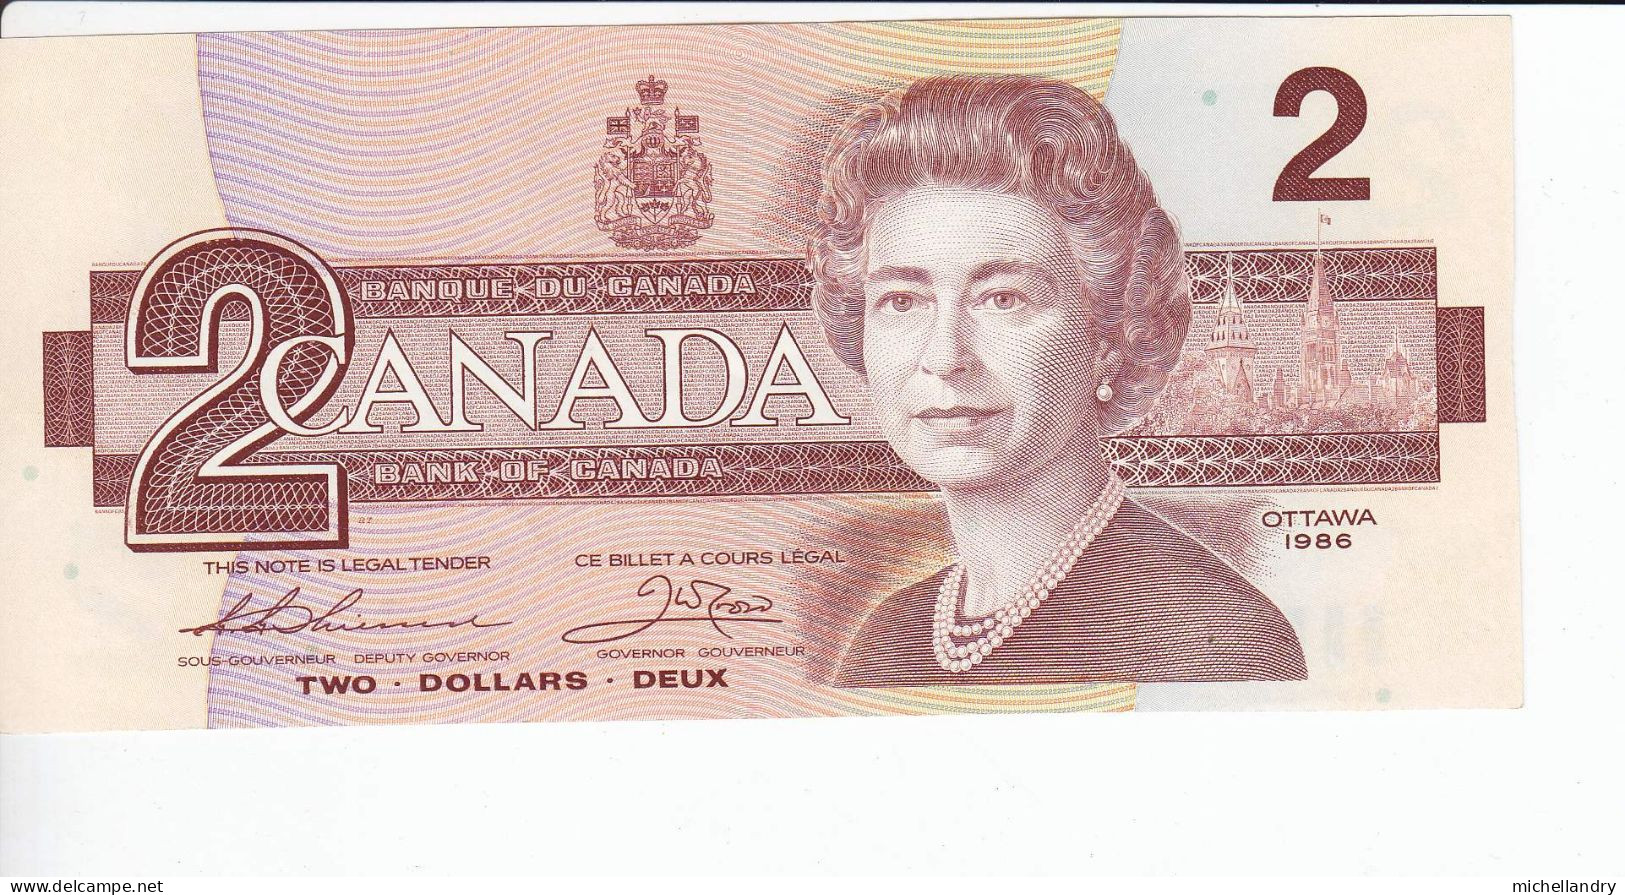 Monnaie (123256) Banque Du Canada 1986 Deux Dollars Série EGD3091500 Thiessen/Crow - Canada